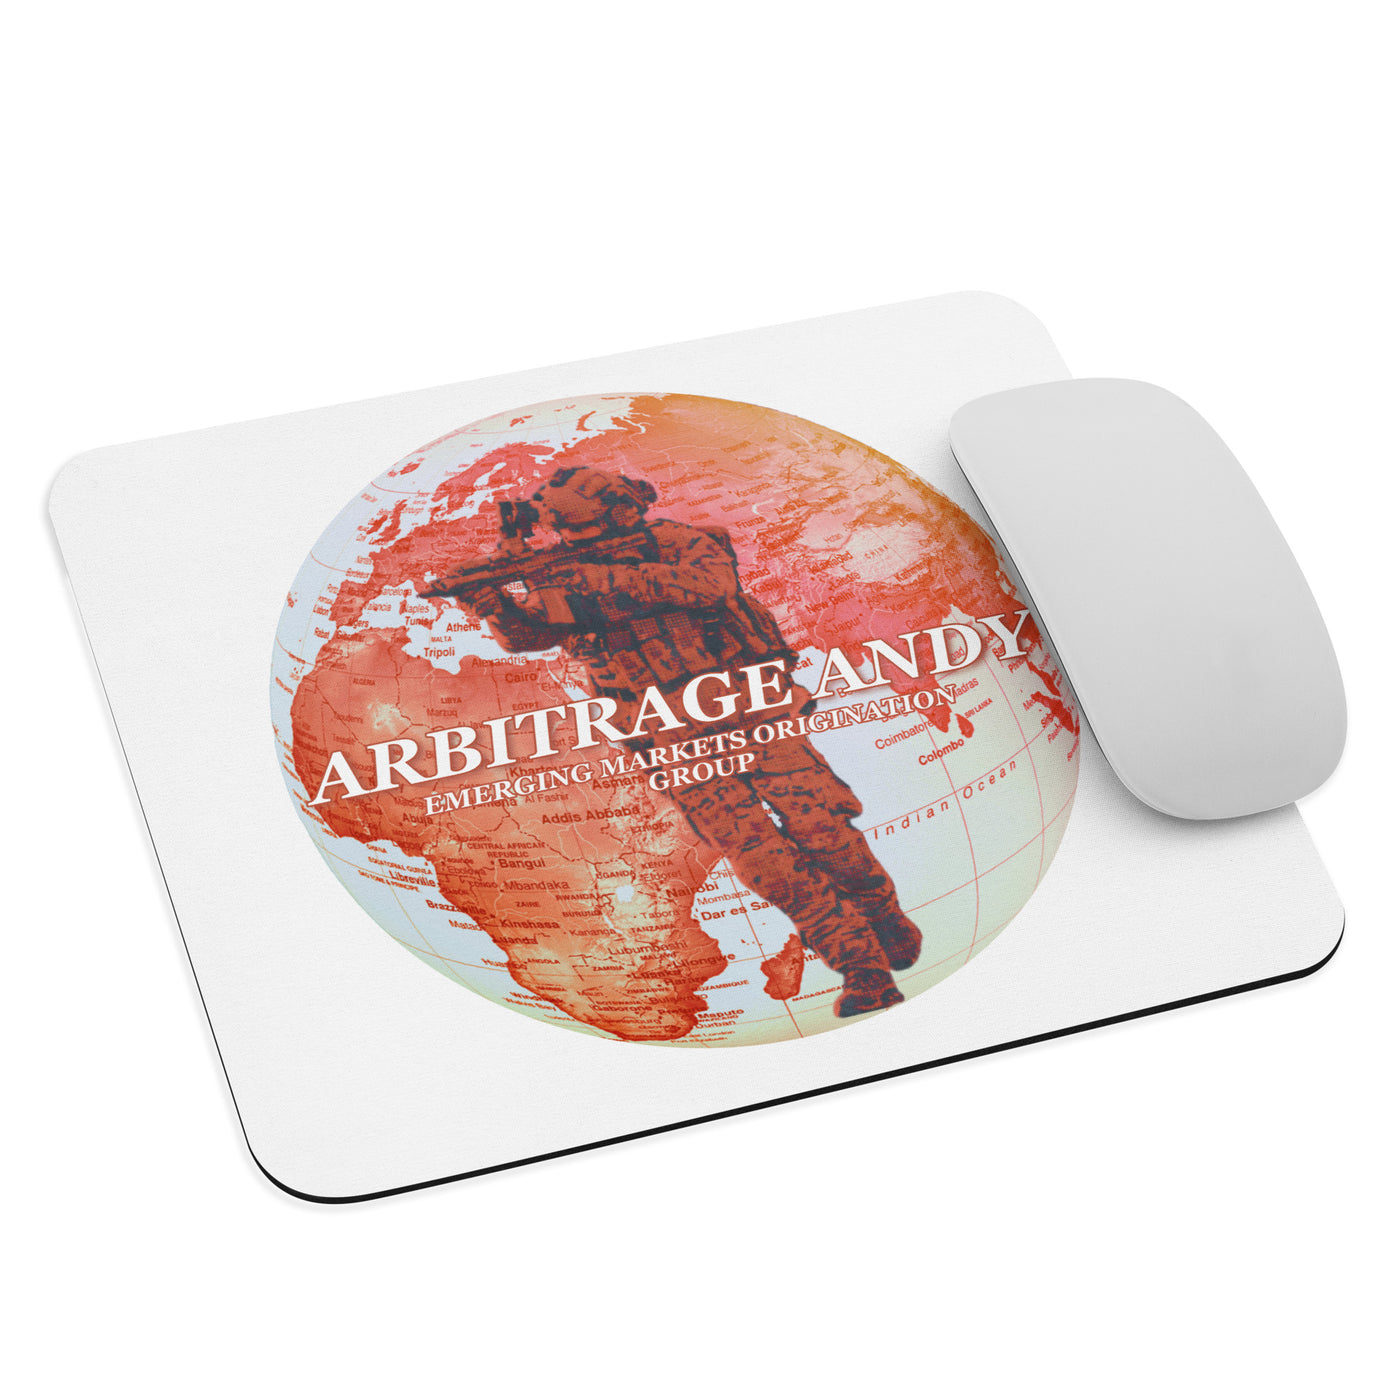 Arbitrage Andy Emerging Market Origination Group Mouse Pad - Arbitrage Andy